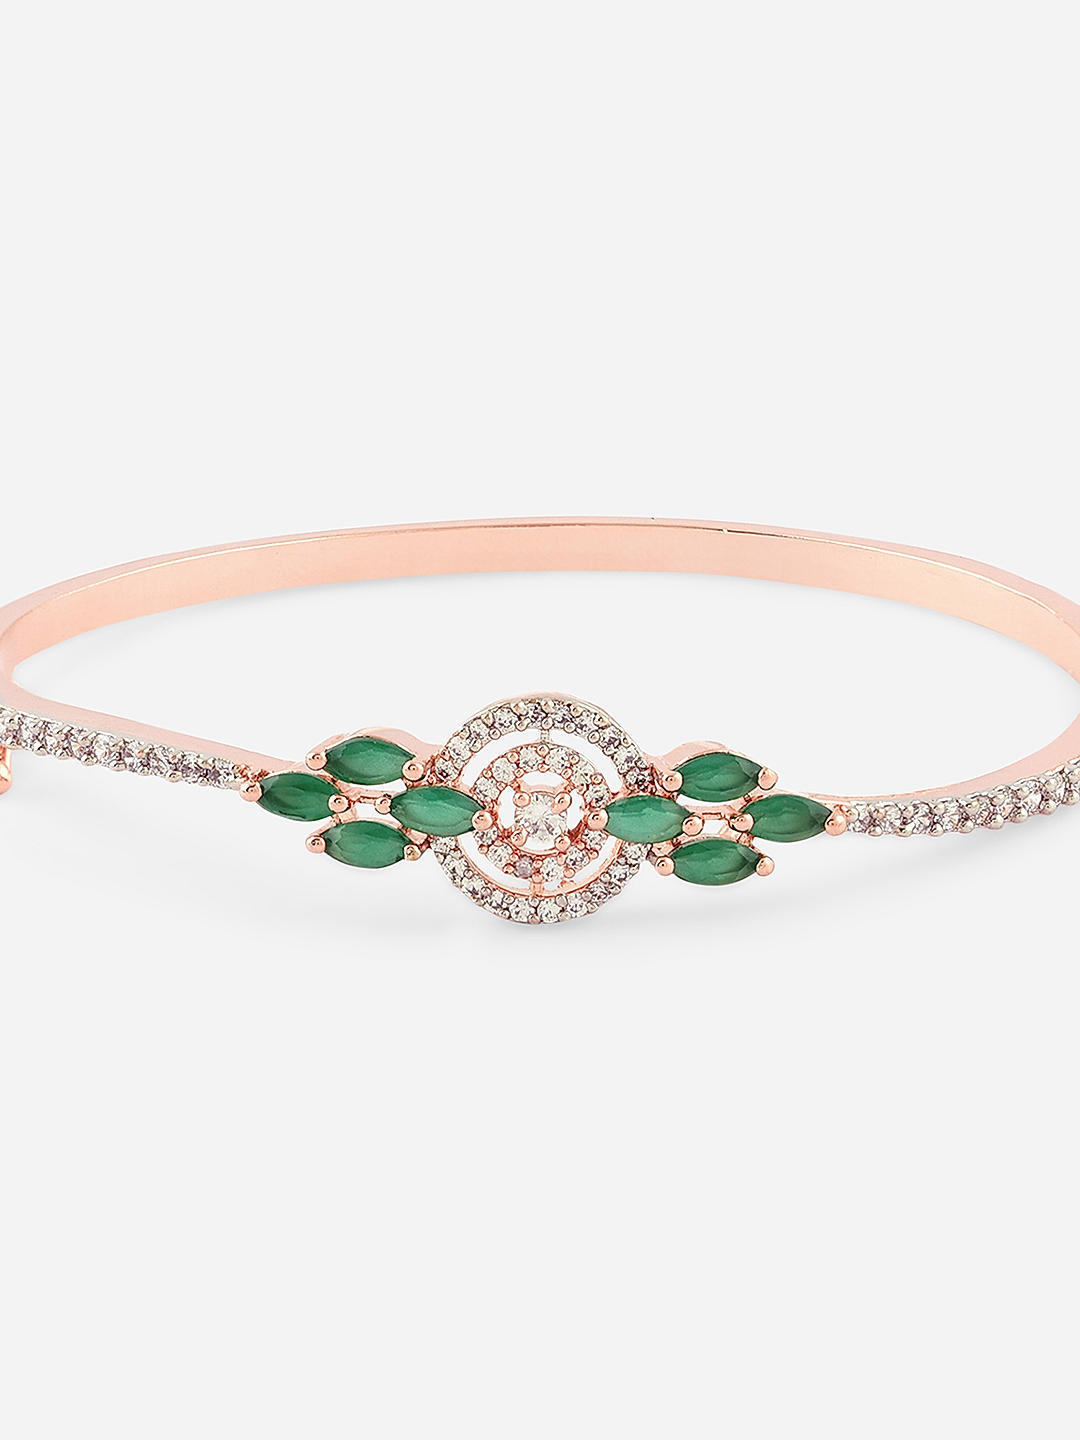 Lab Created Emerald and Diamond 14kt White Gold Bracelet | Costco-hdcinema.vn